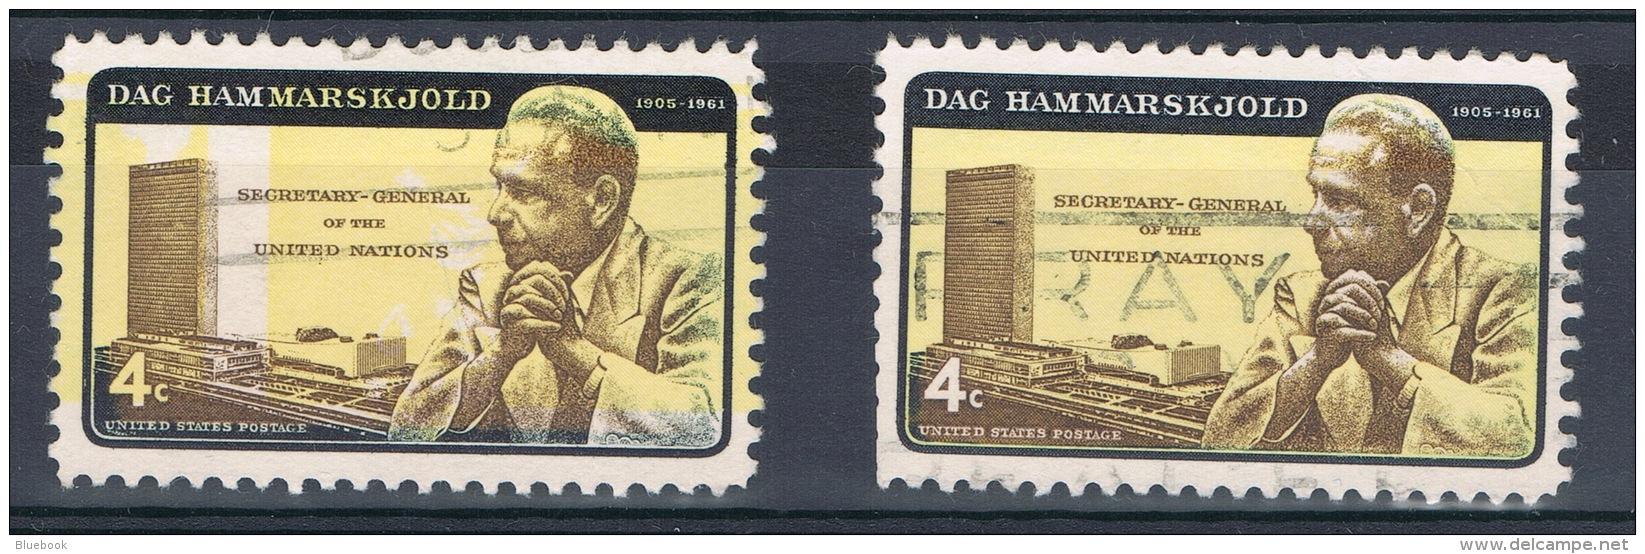 RB 1163 -  USA Dag Hammarskjold 4c Stamp - Printing Error &amp; Colour Shift - Errors, Freaks & Oddities (EFOs)